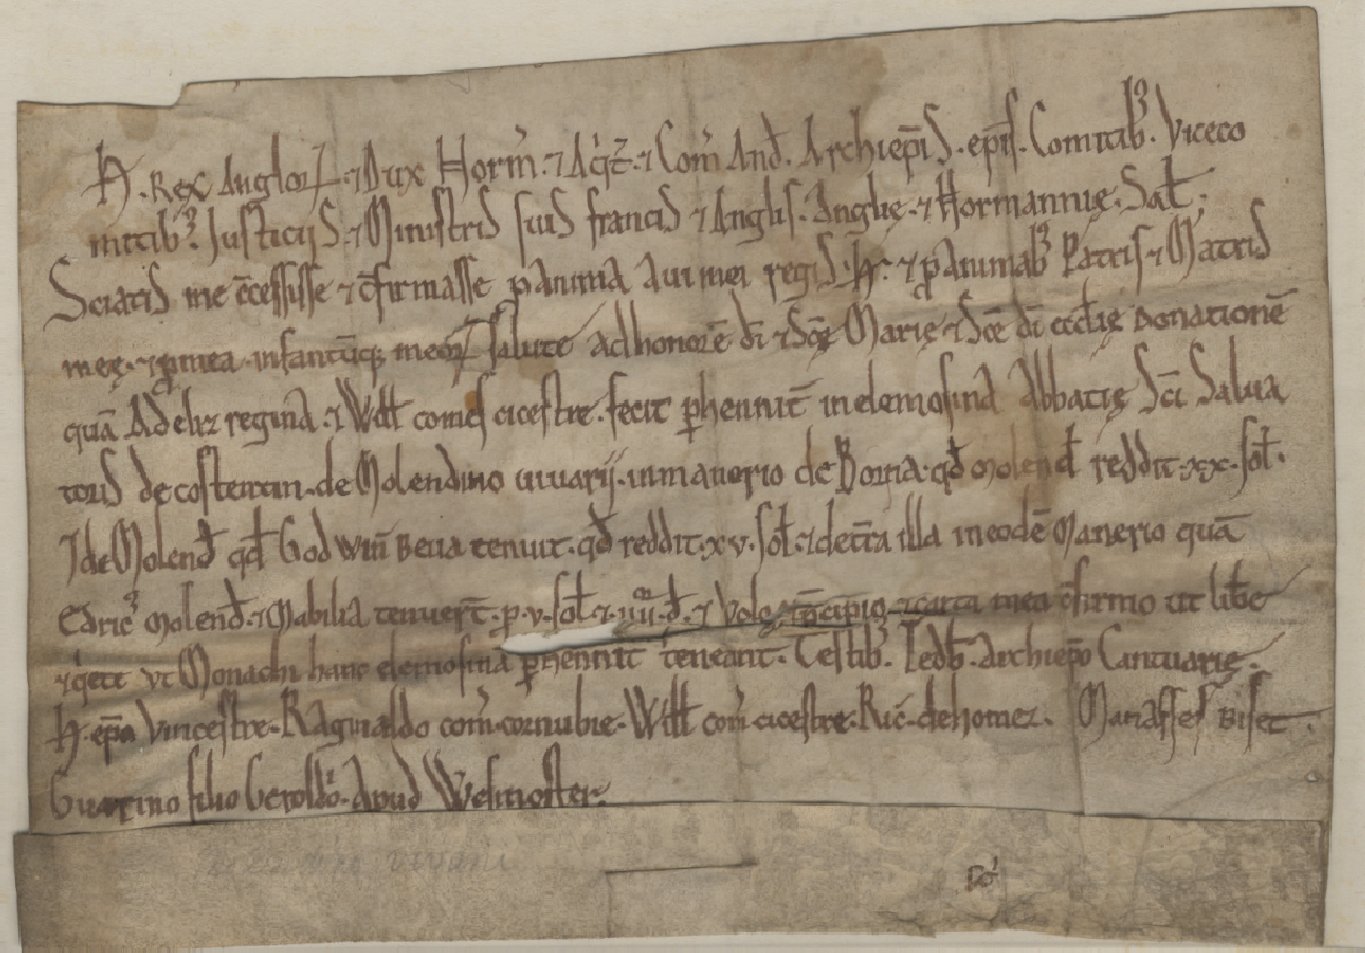 A twelfth century charter